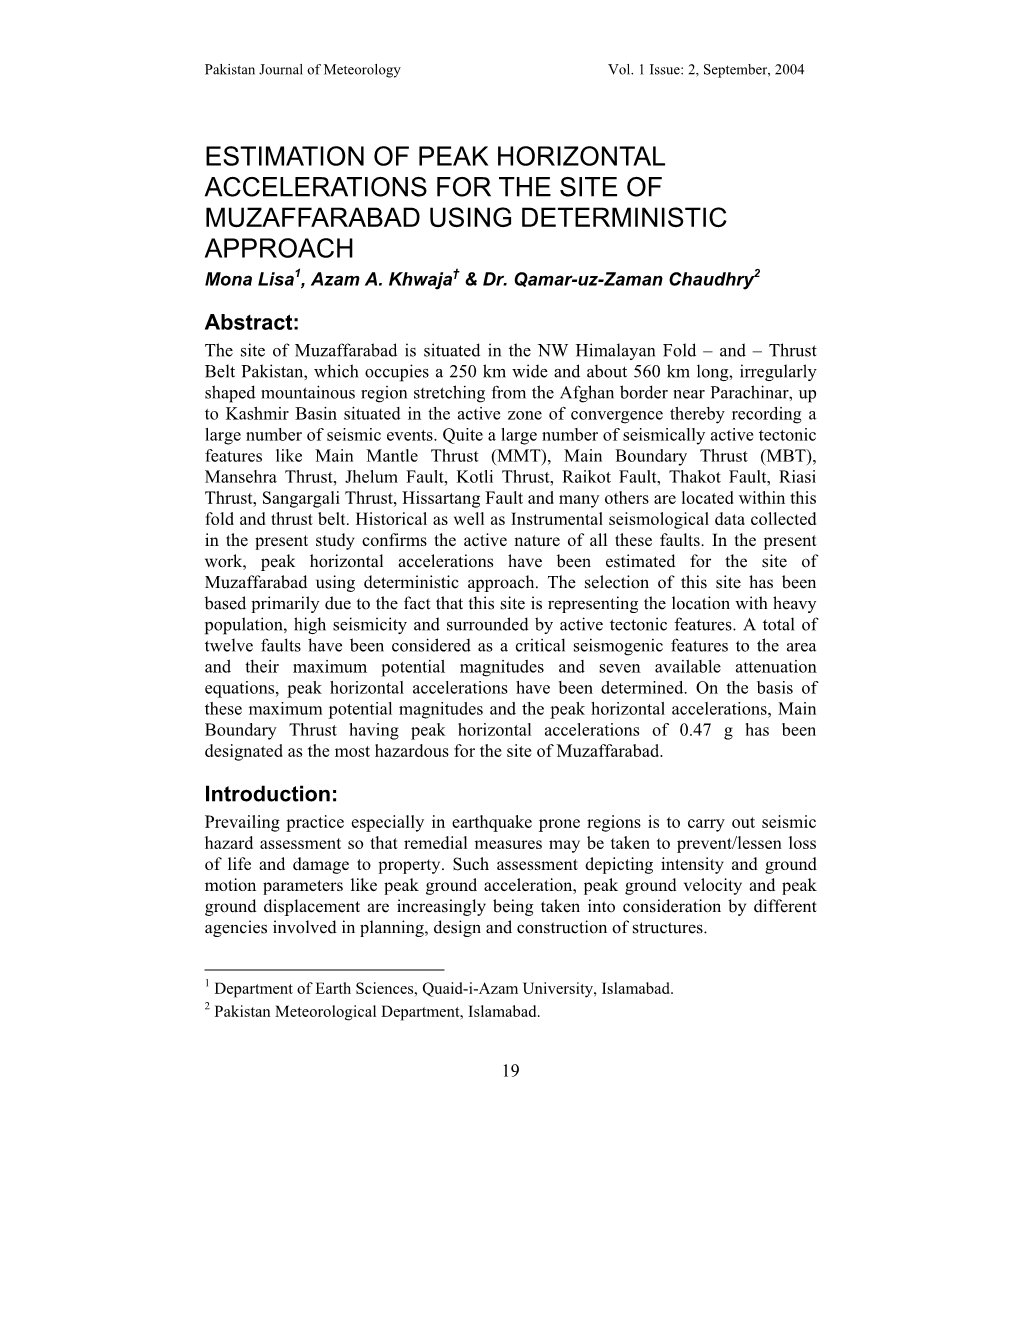 ESTIMATION of PEAK HORIZONTAL ACCELERATIONS for the SITE of MUZAFFARABAD USING DETERMINISTIC APPROACH Mona Lisa1, Azam A